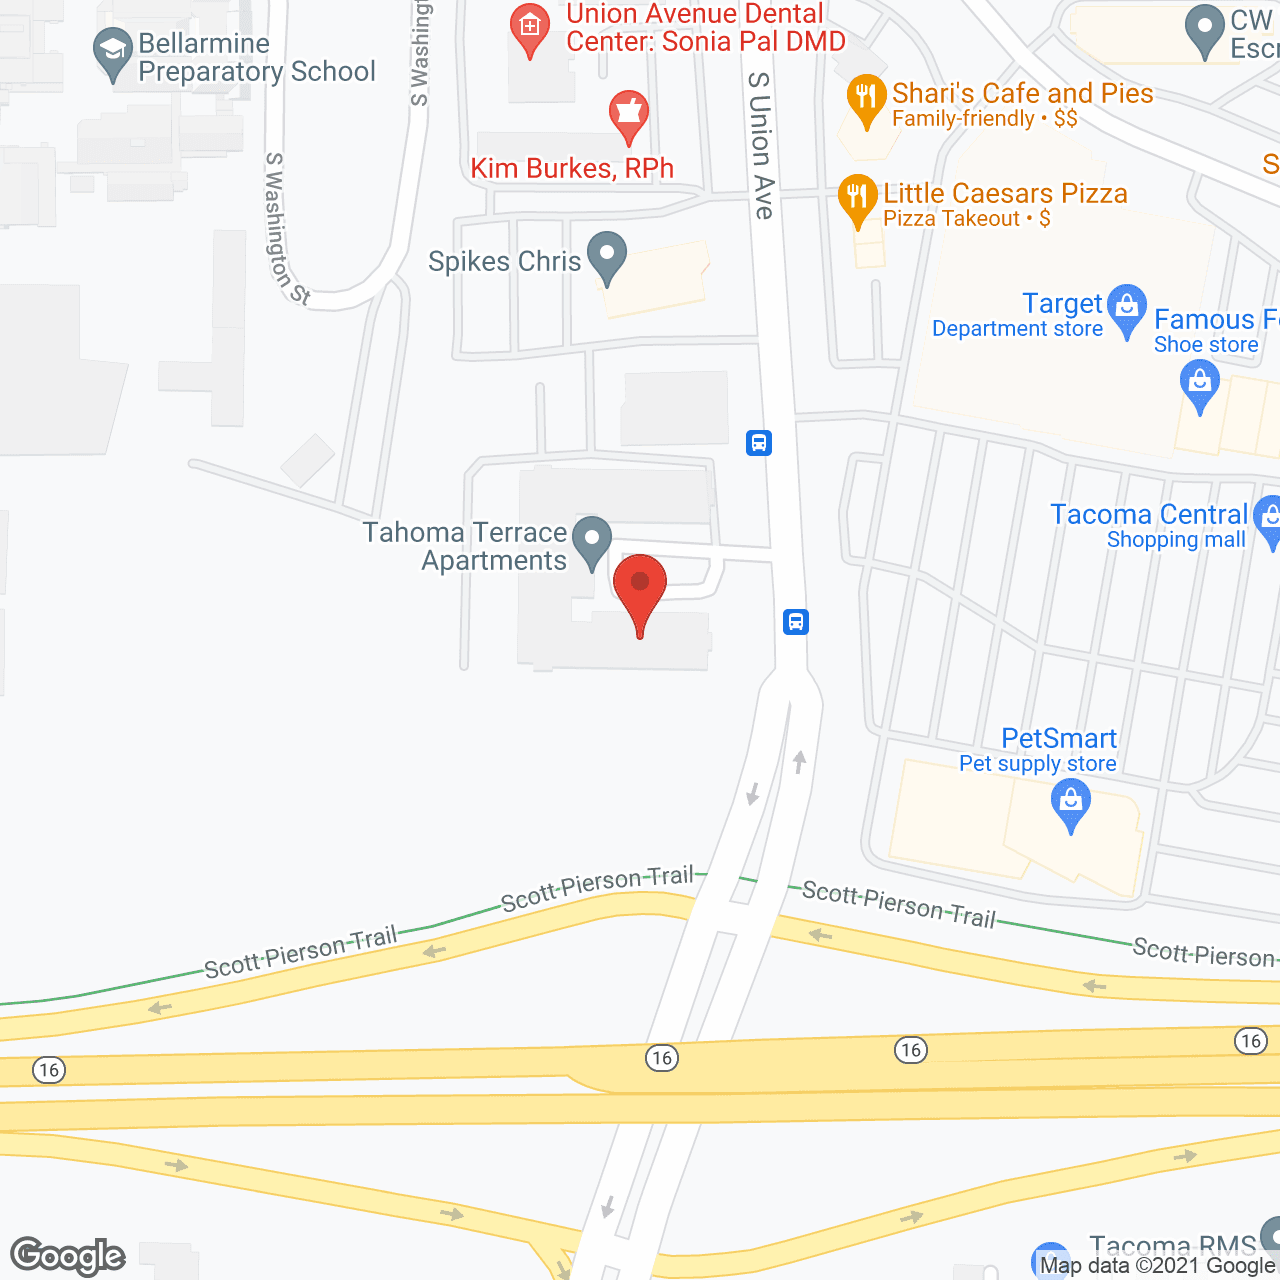 Tahoma Terrace Apartments in google map